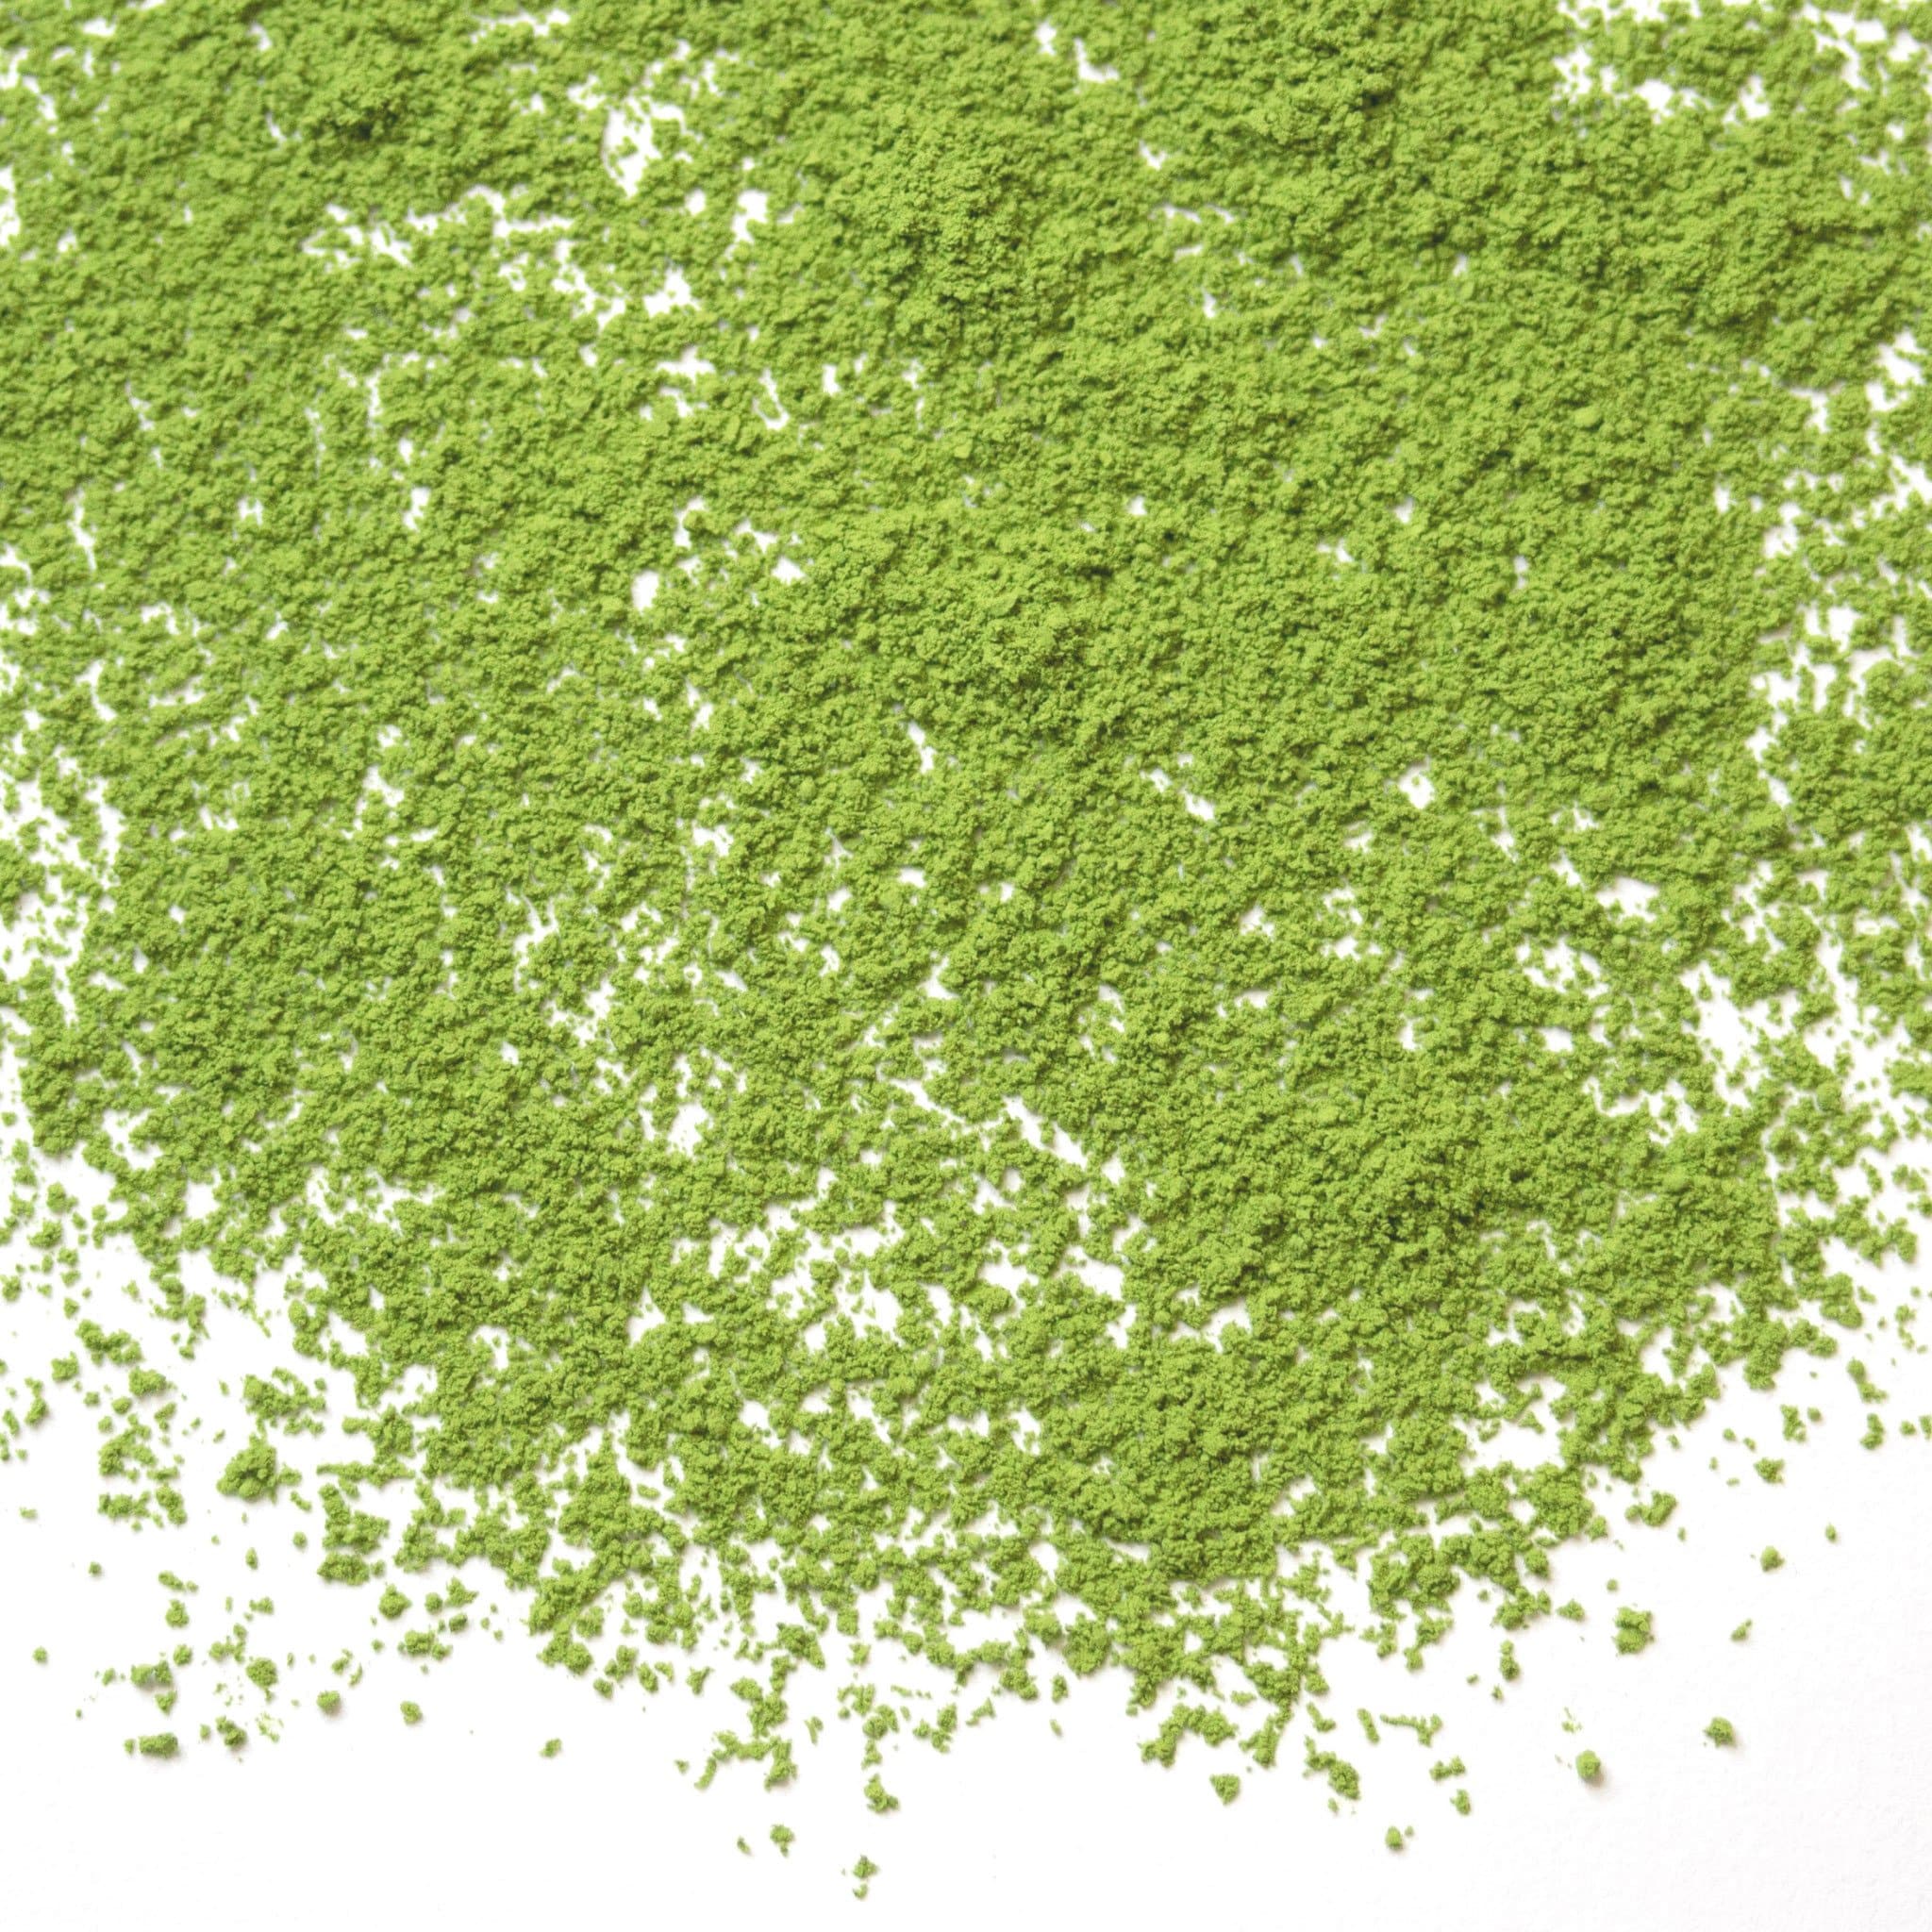 Matcha Koicha green tea powder